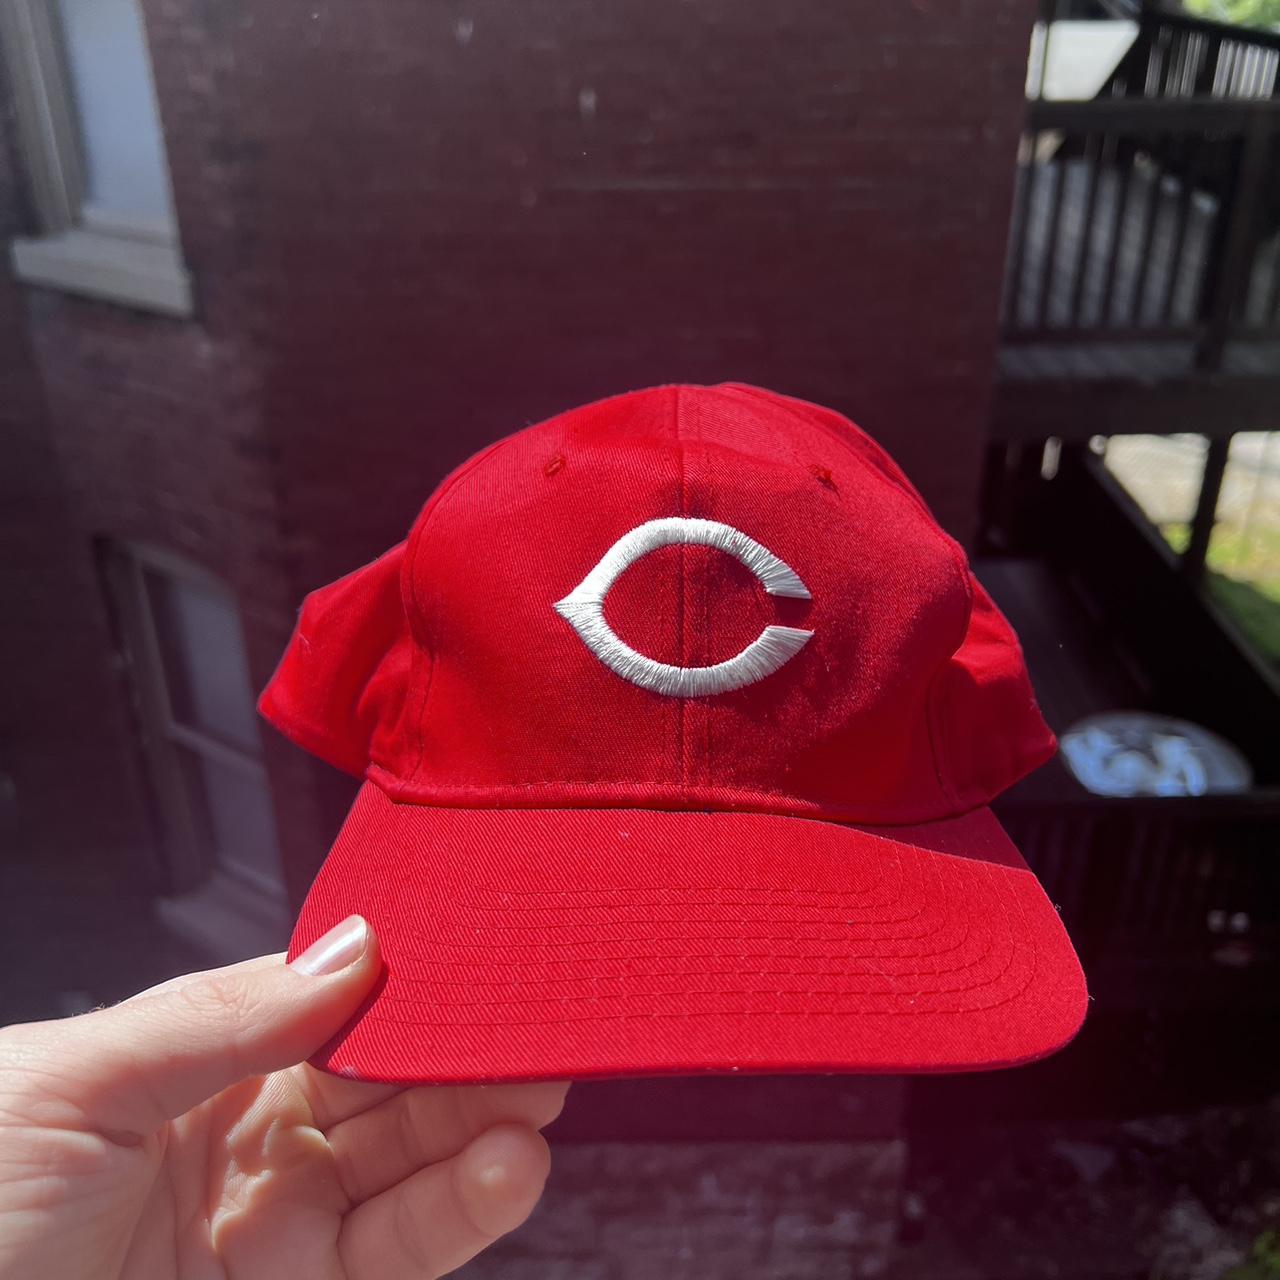 Cincinnati Reds Hat Cap Snapback Vintage MLB Baseball